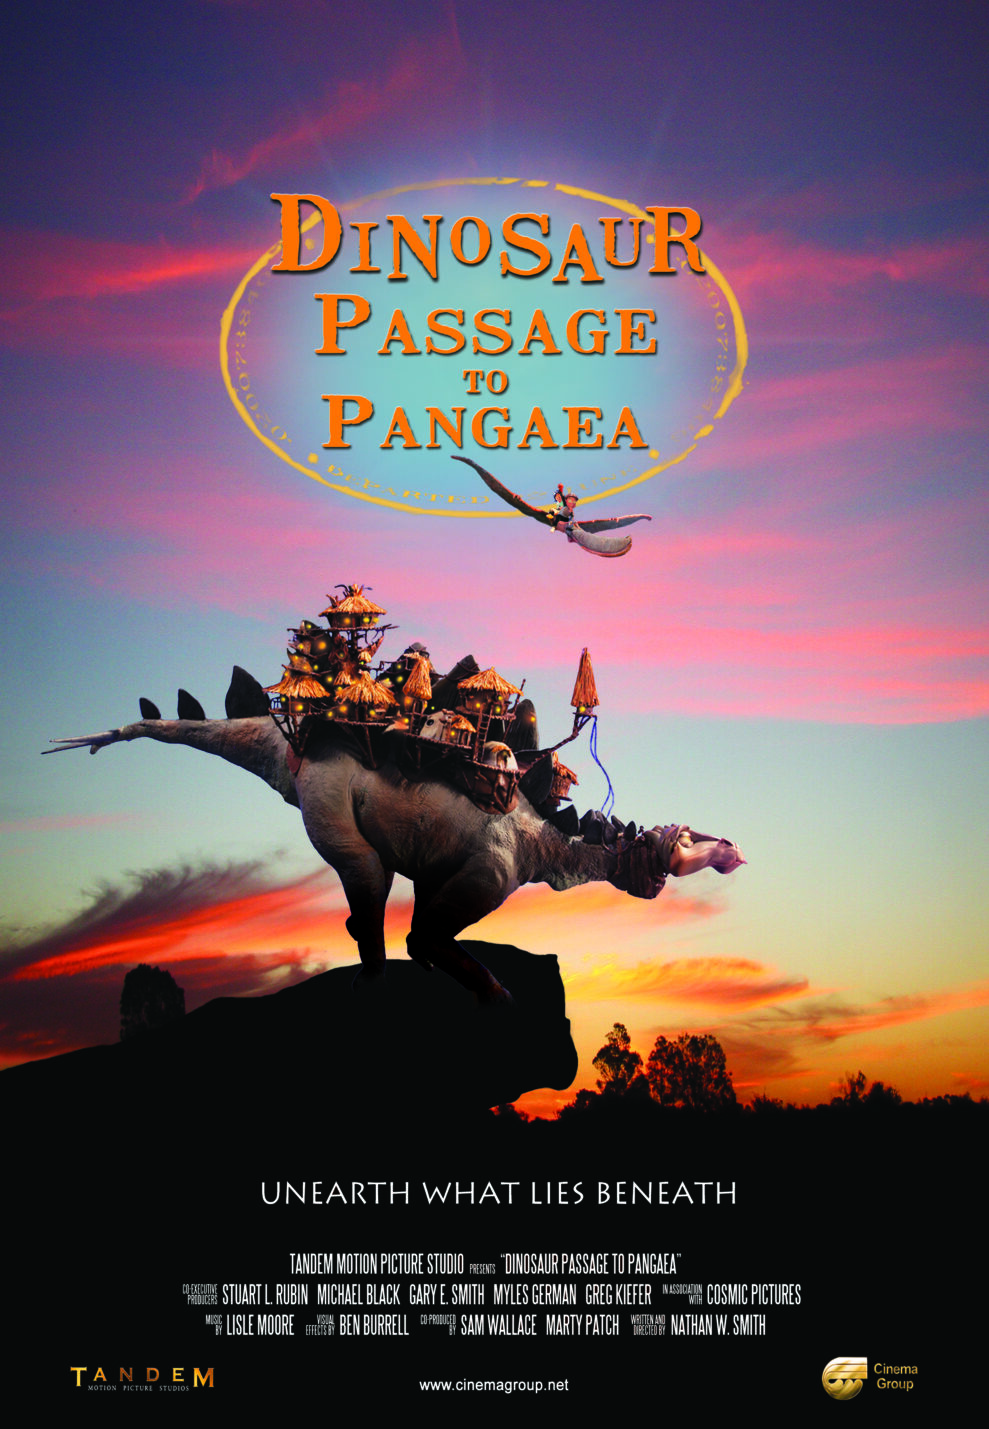 Dinosaur: Passage to Pangaea Poster